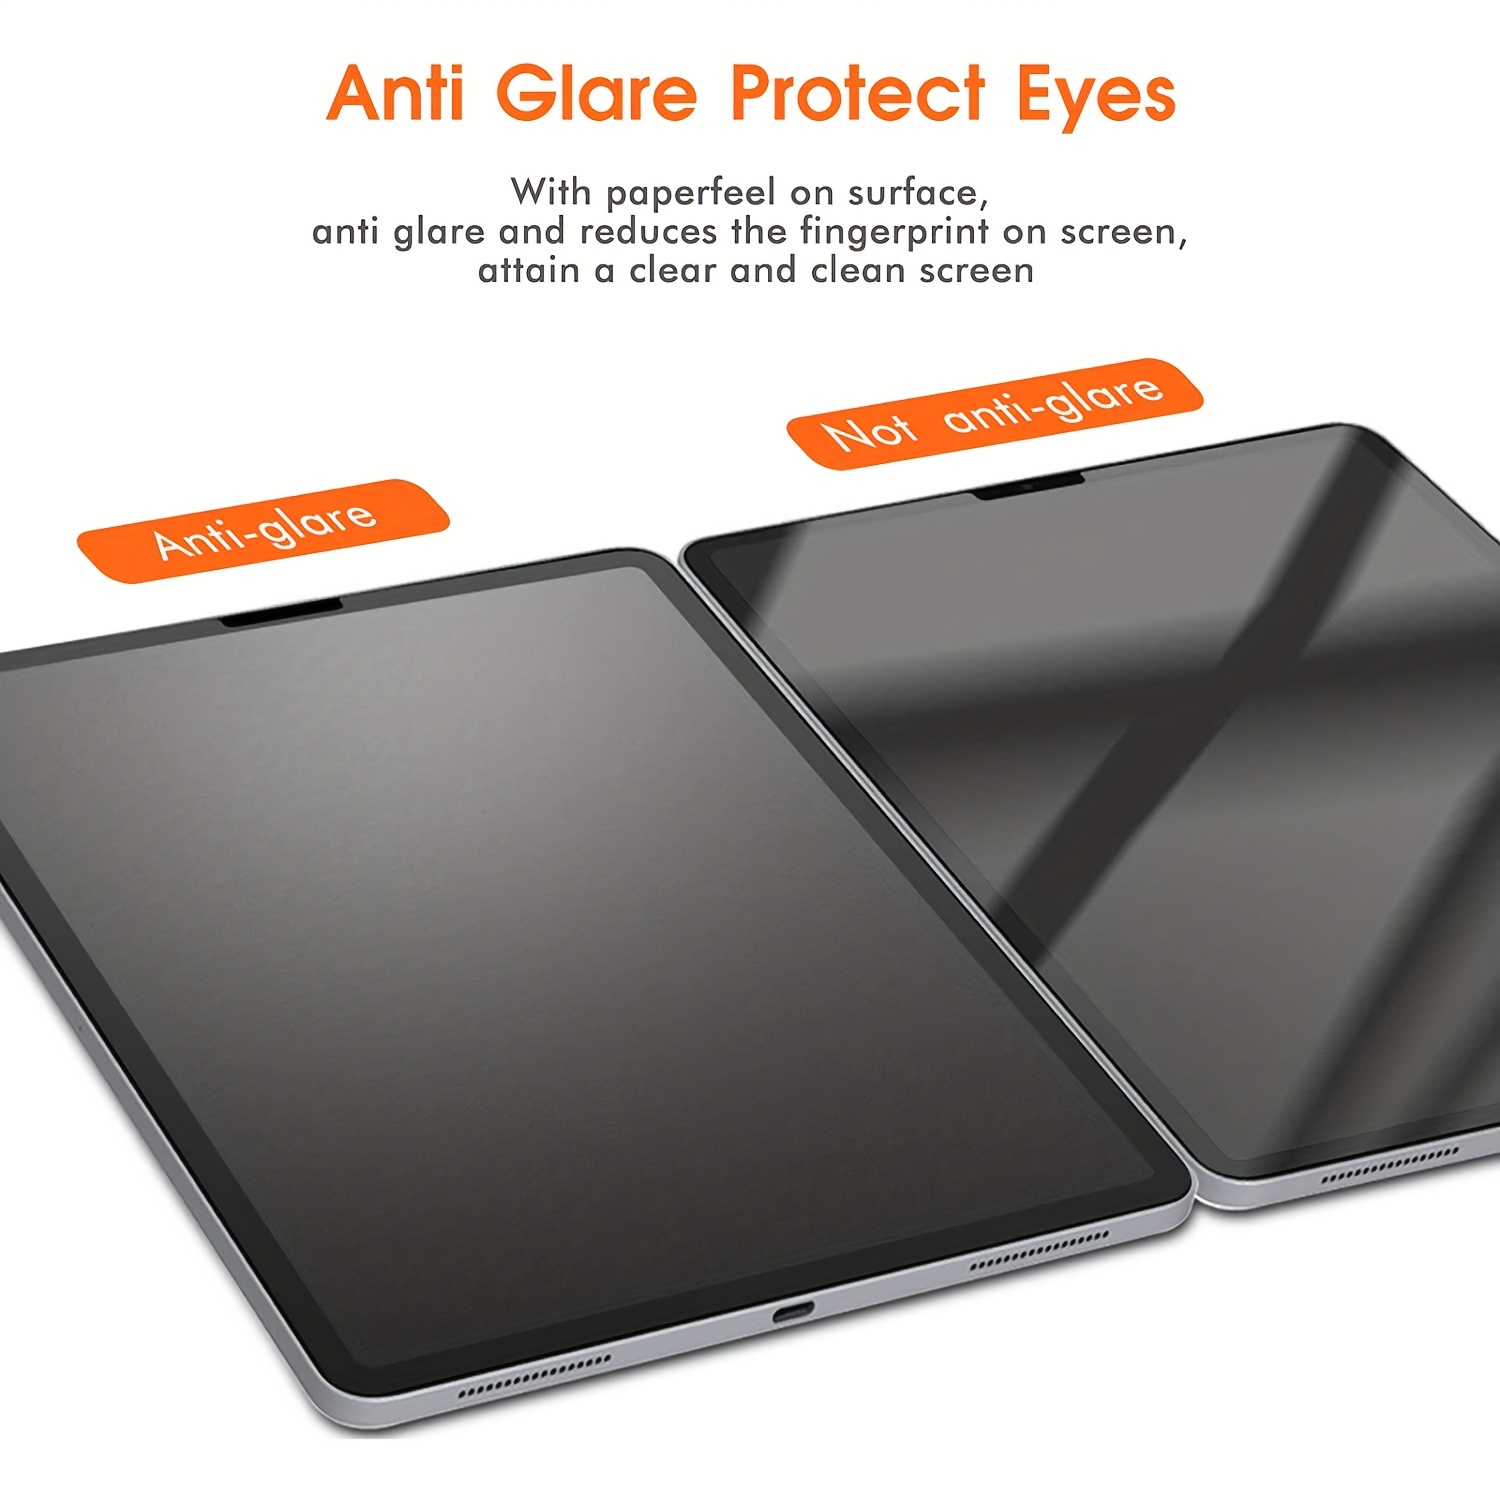 Lenovo Tab P11 Pro Screen Protector - Paper